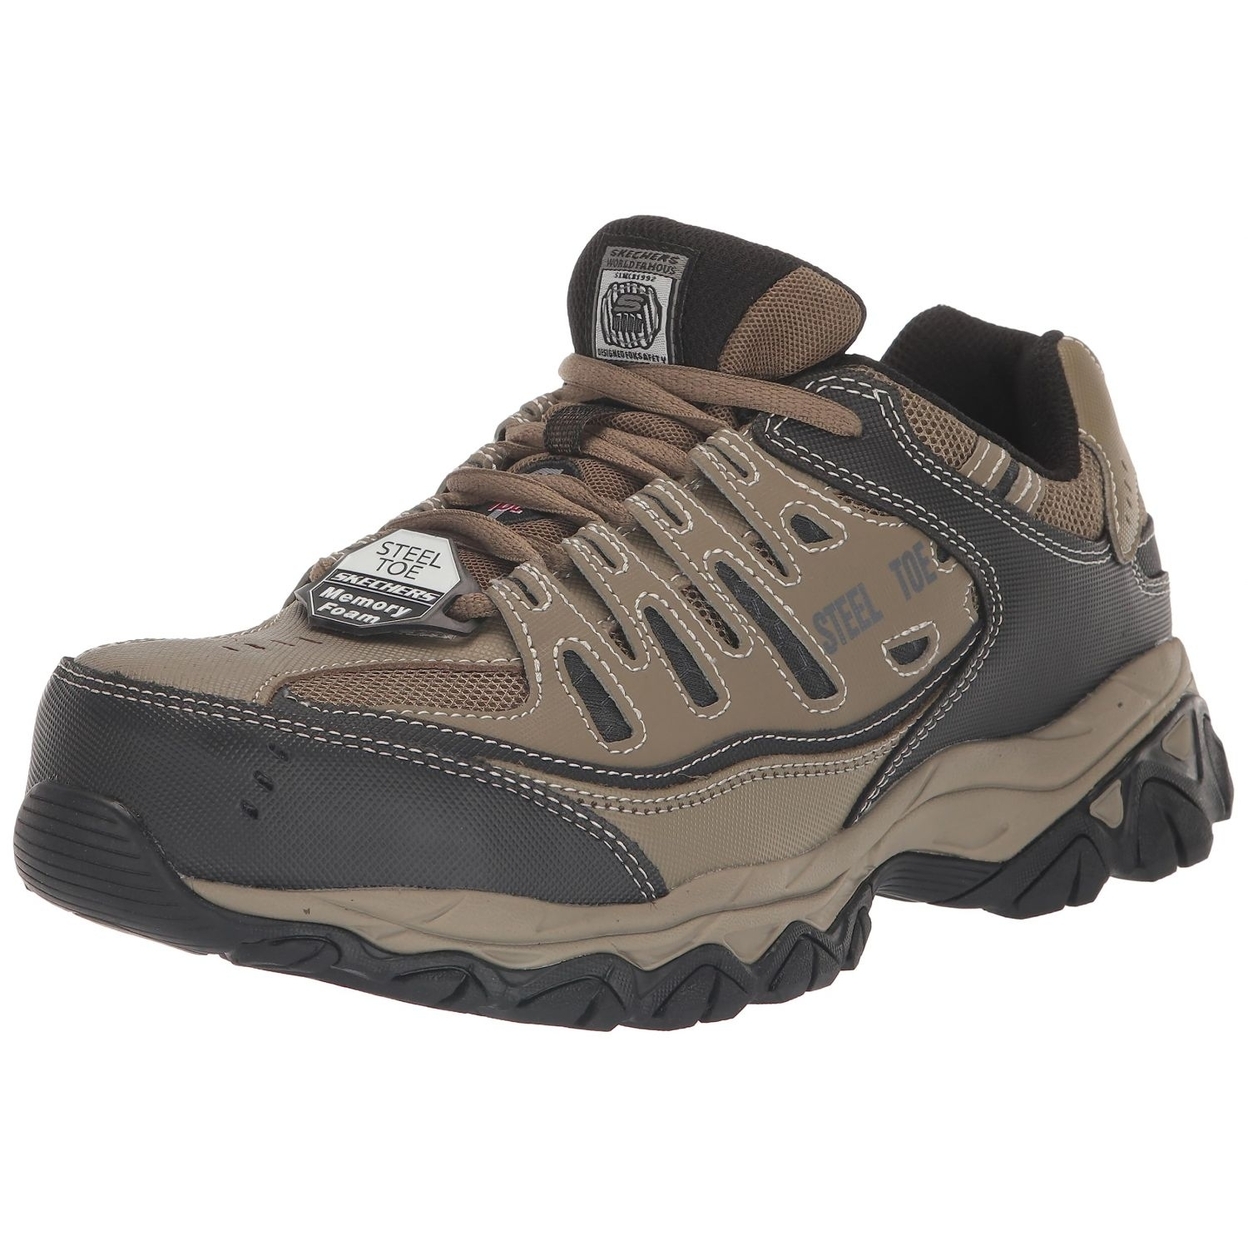 Skechers Men's Cankton-U Industrial Shoe 7 BLACK/CHARCOAL - BLACK/CHARCOAL, 7.5-W